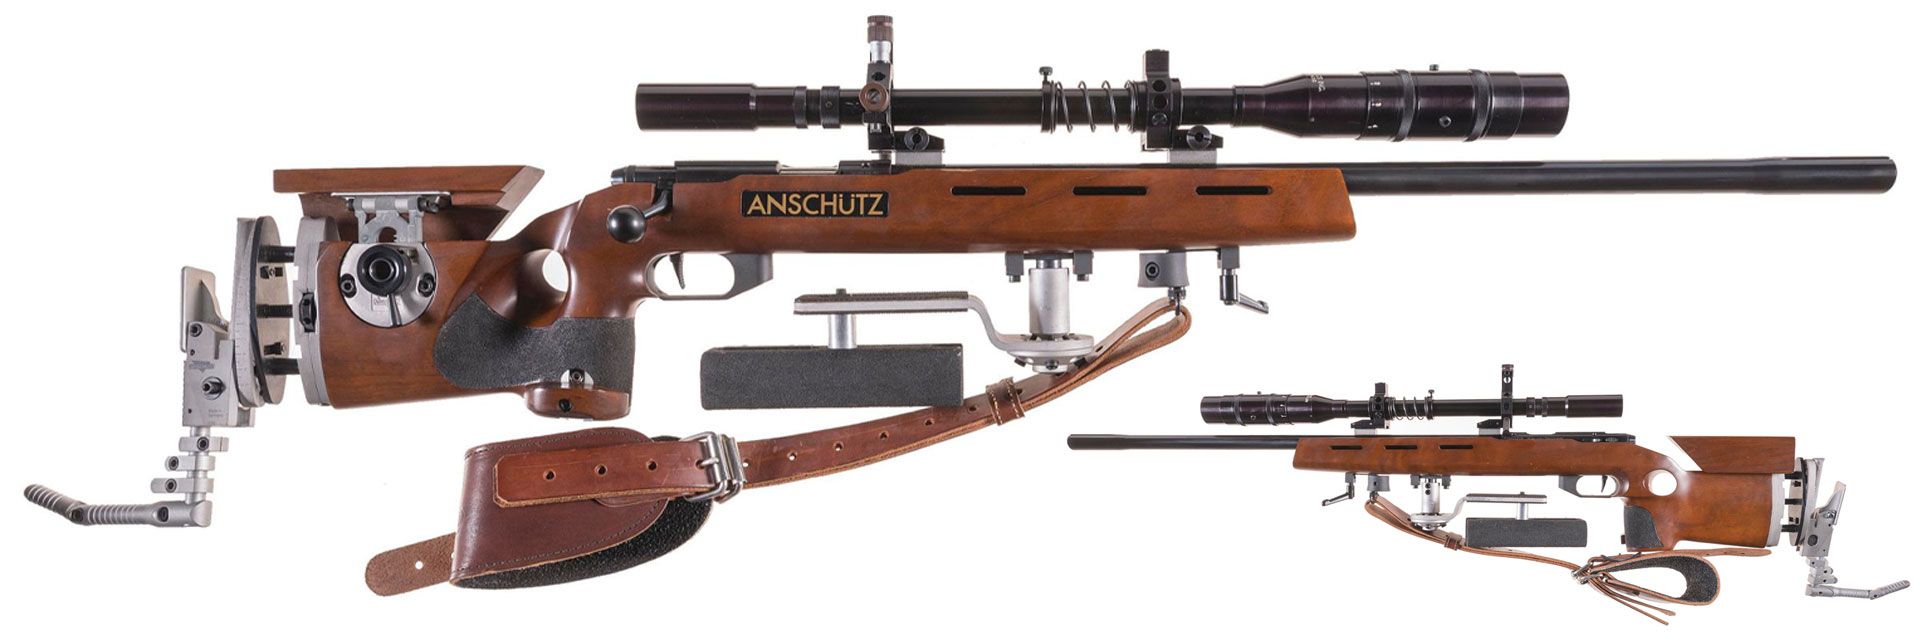 Lot 662: Anschutz Super Match Model 1913 Bolt Action Rifle with Scope